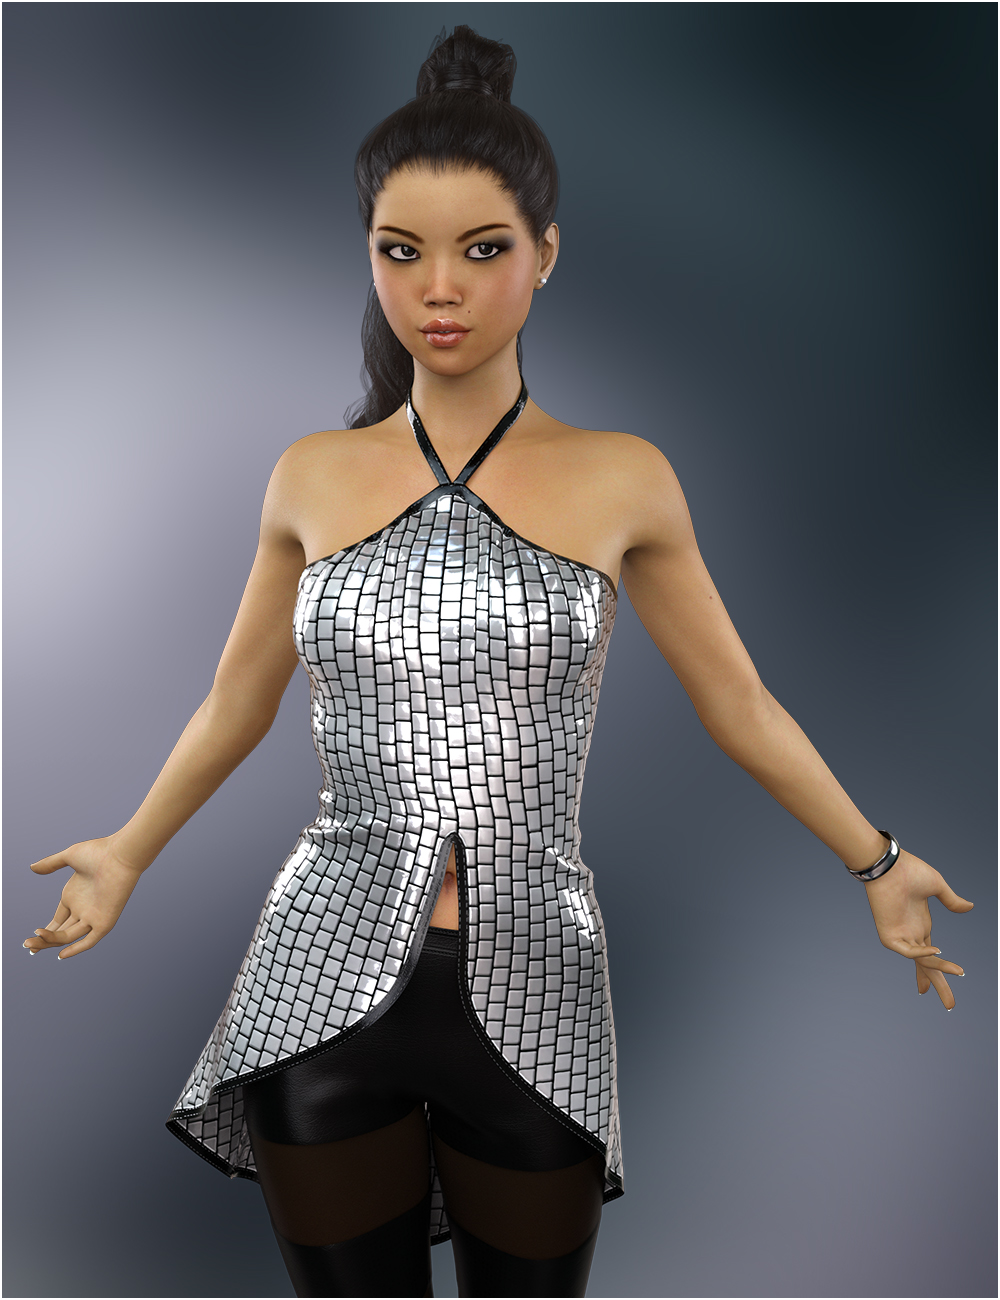 SSFW Tenshi HD for Genesis 3 Female(s) by: Sabby3DSublimeProductionsFred Winkler Art, 3D Models by Daz 3D